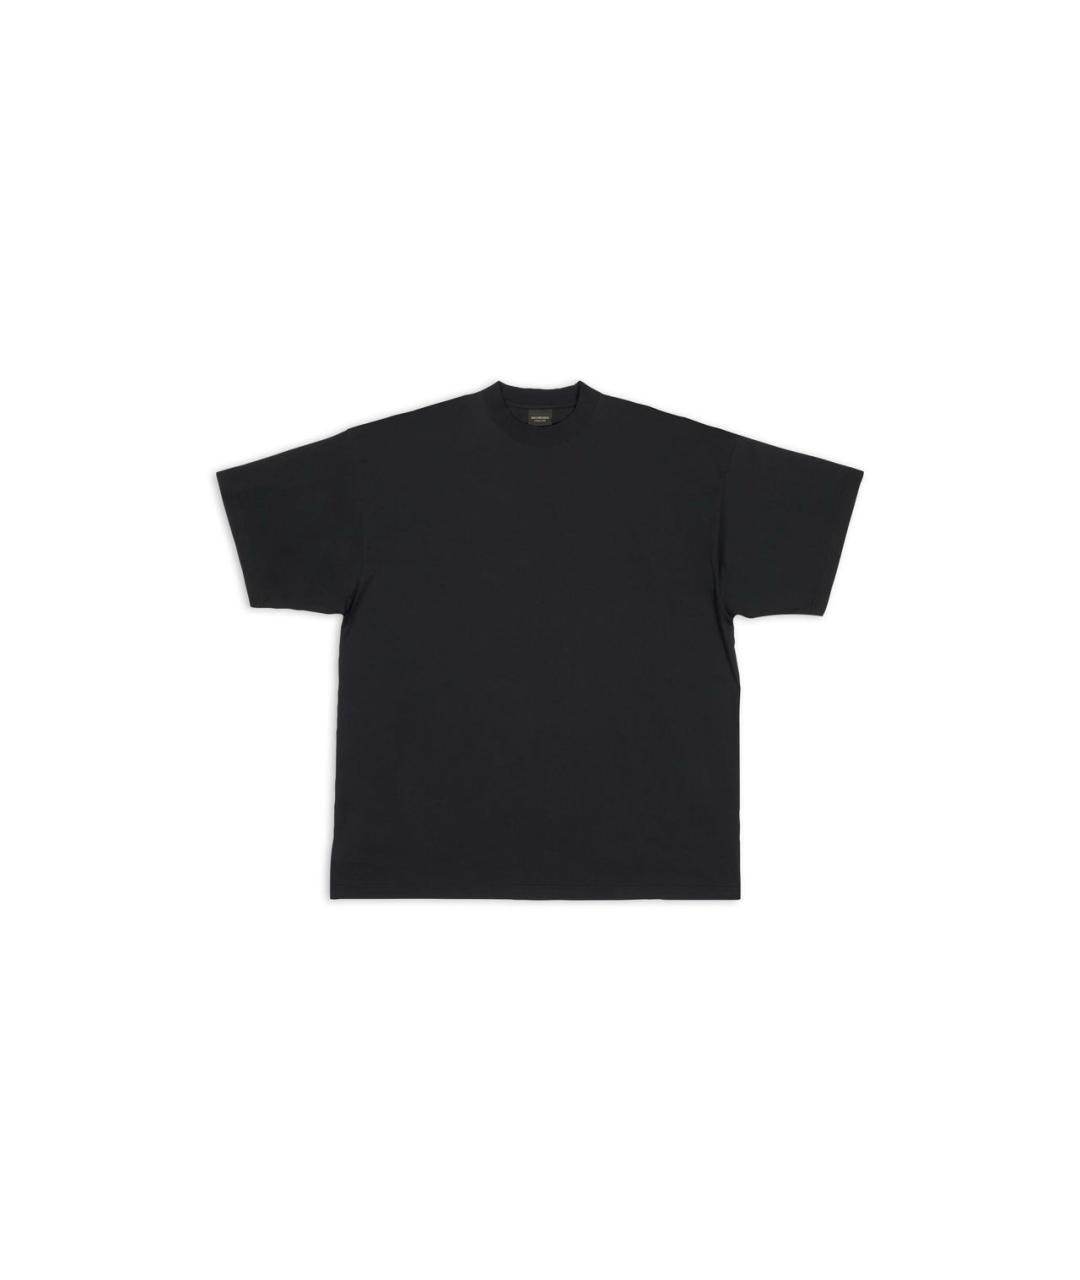 BALENCIAGA Черная хлопковая футболка, фото 1